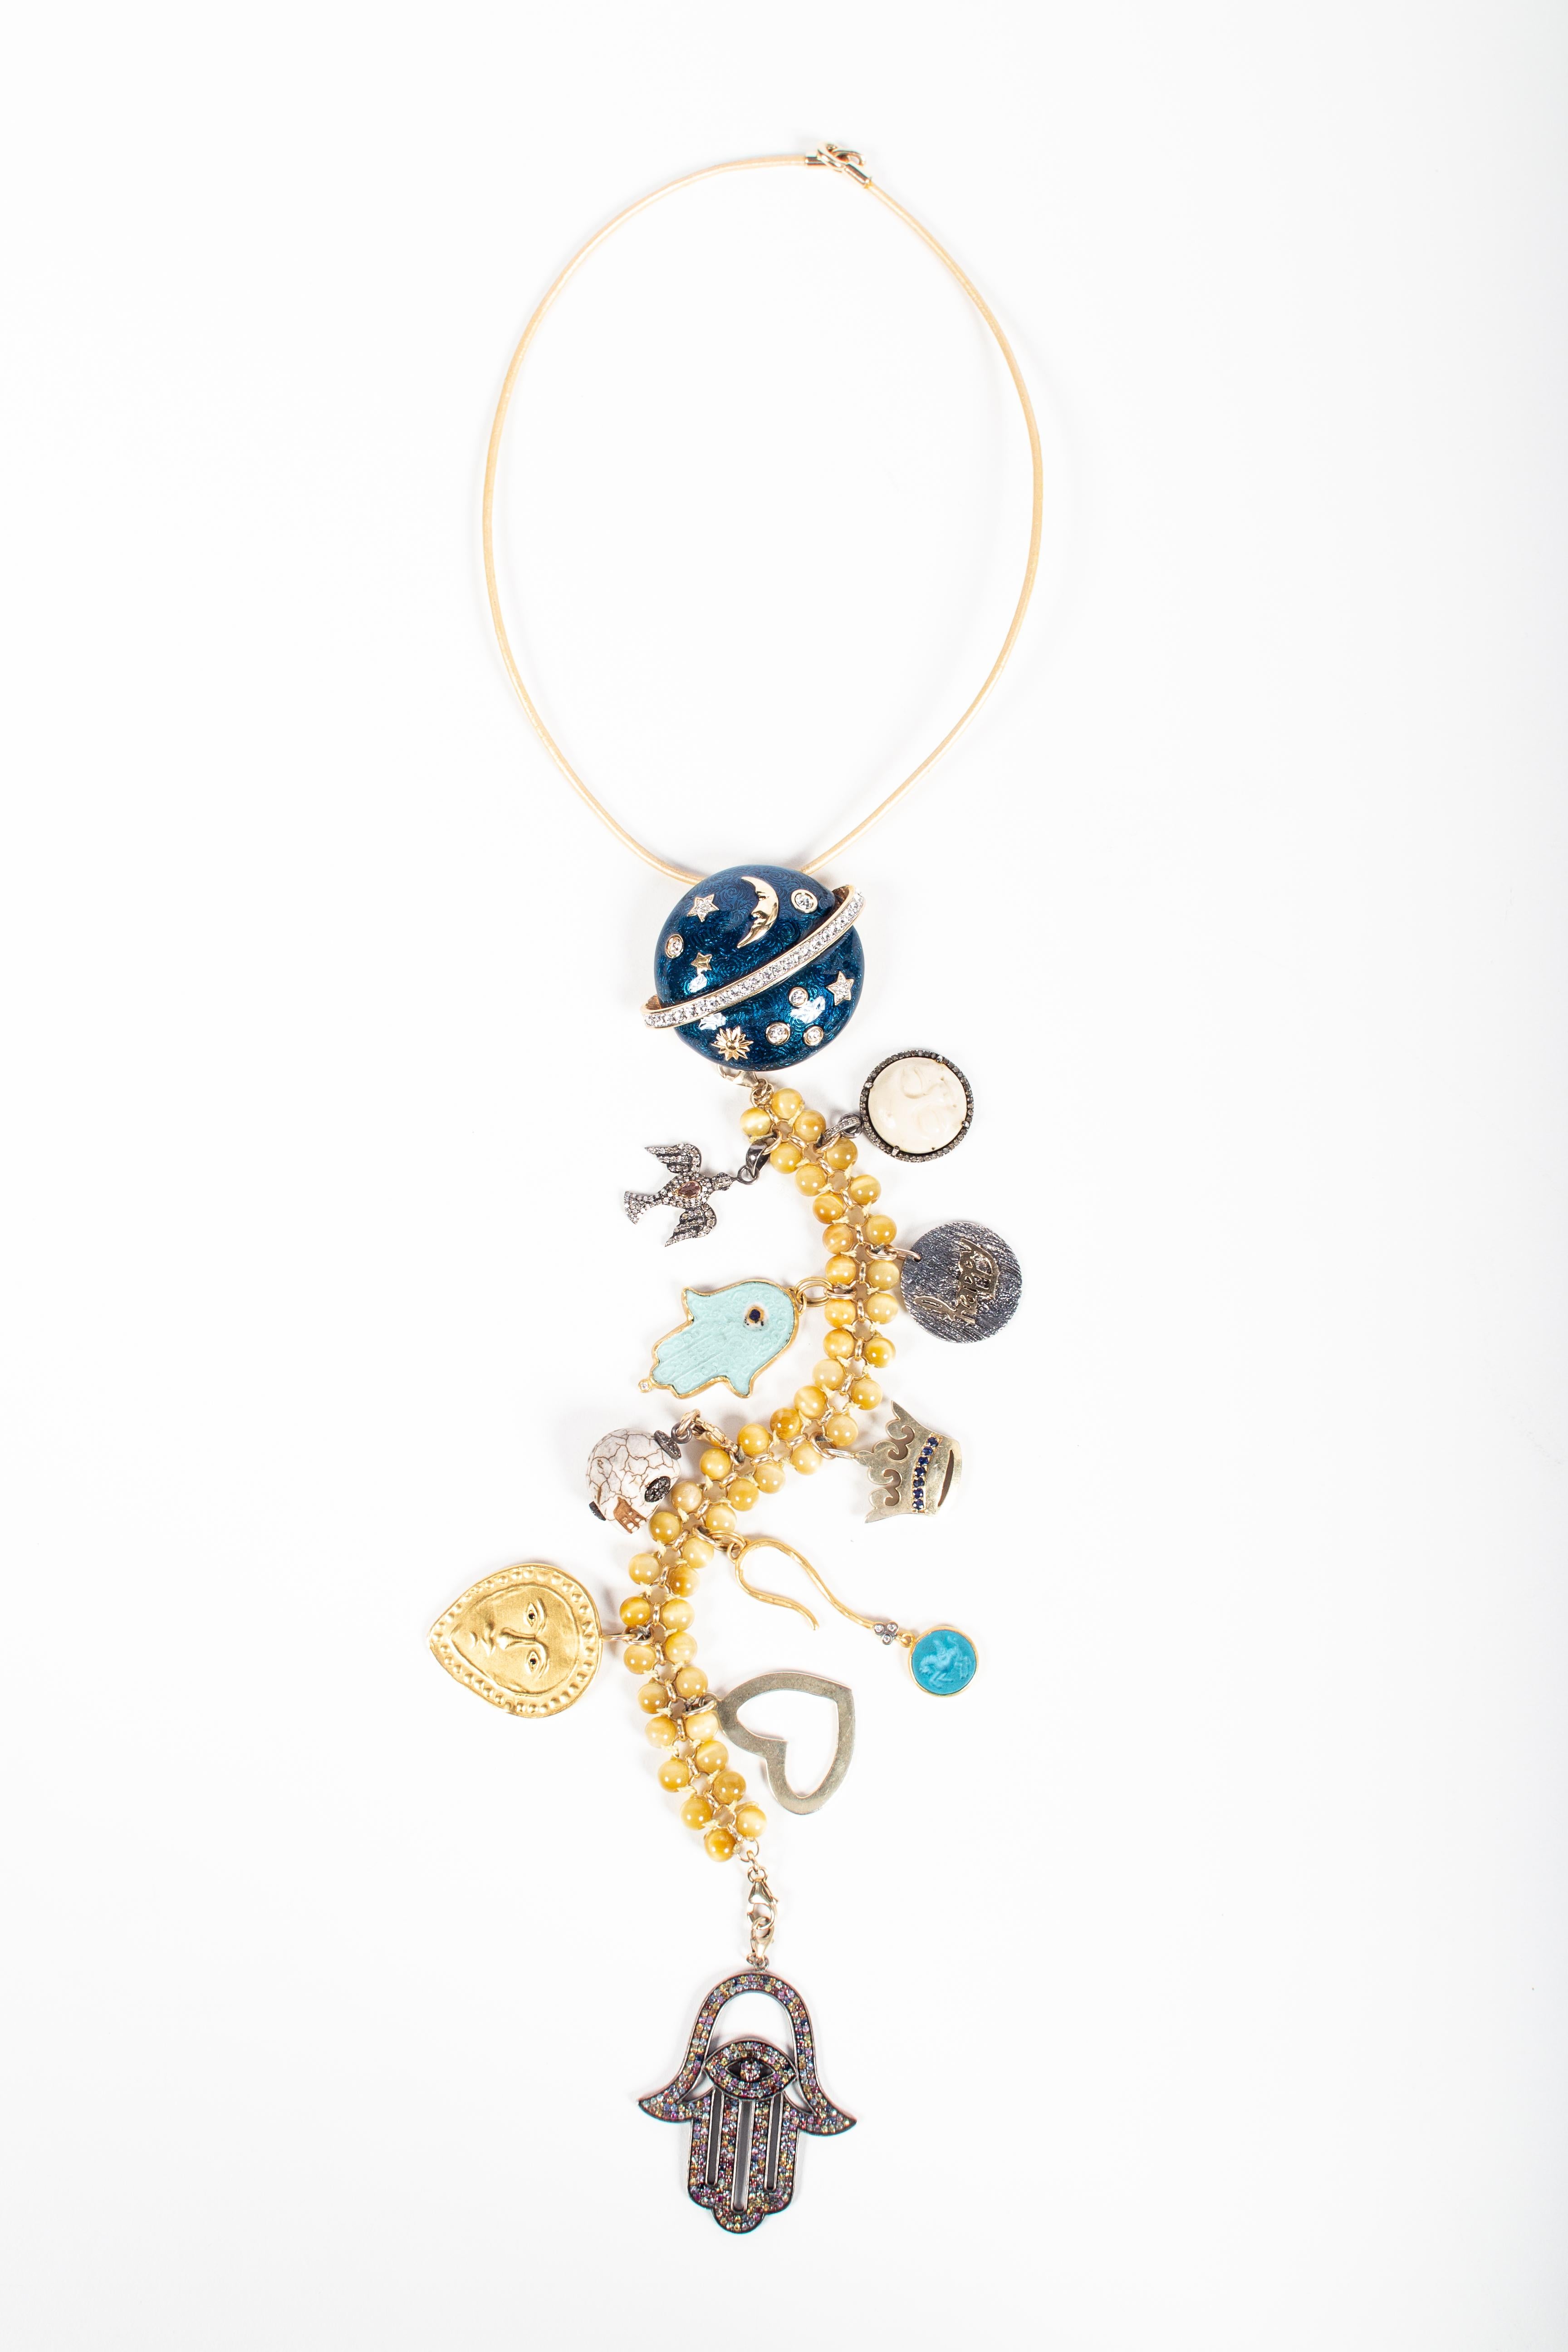 Women's or Men's Clarissa Bronfman 'Planetary Passion' Symbol Tree Necklace